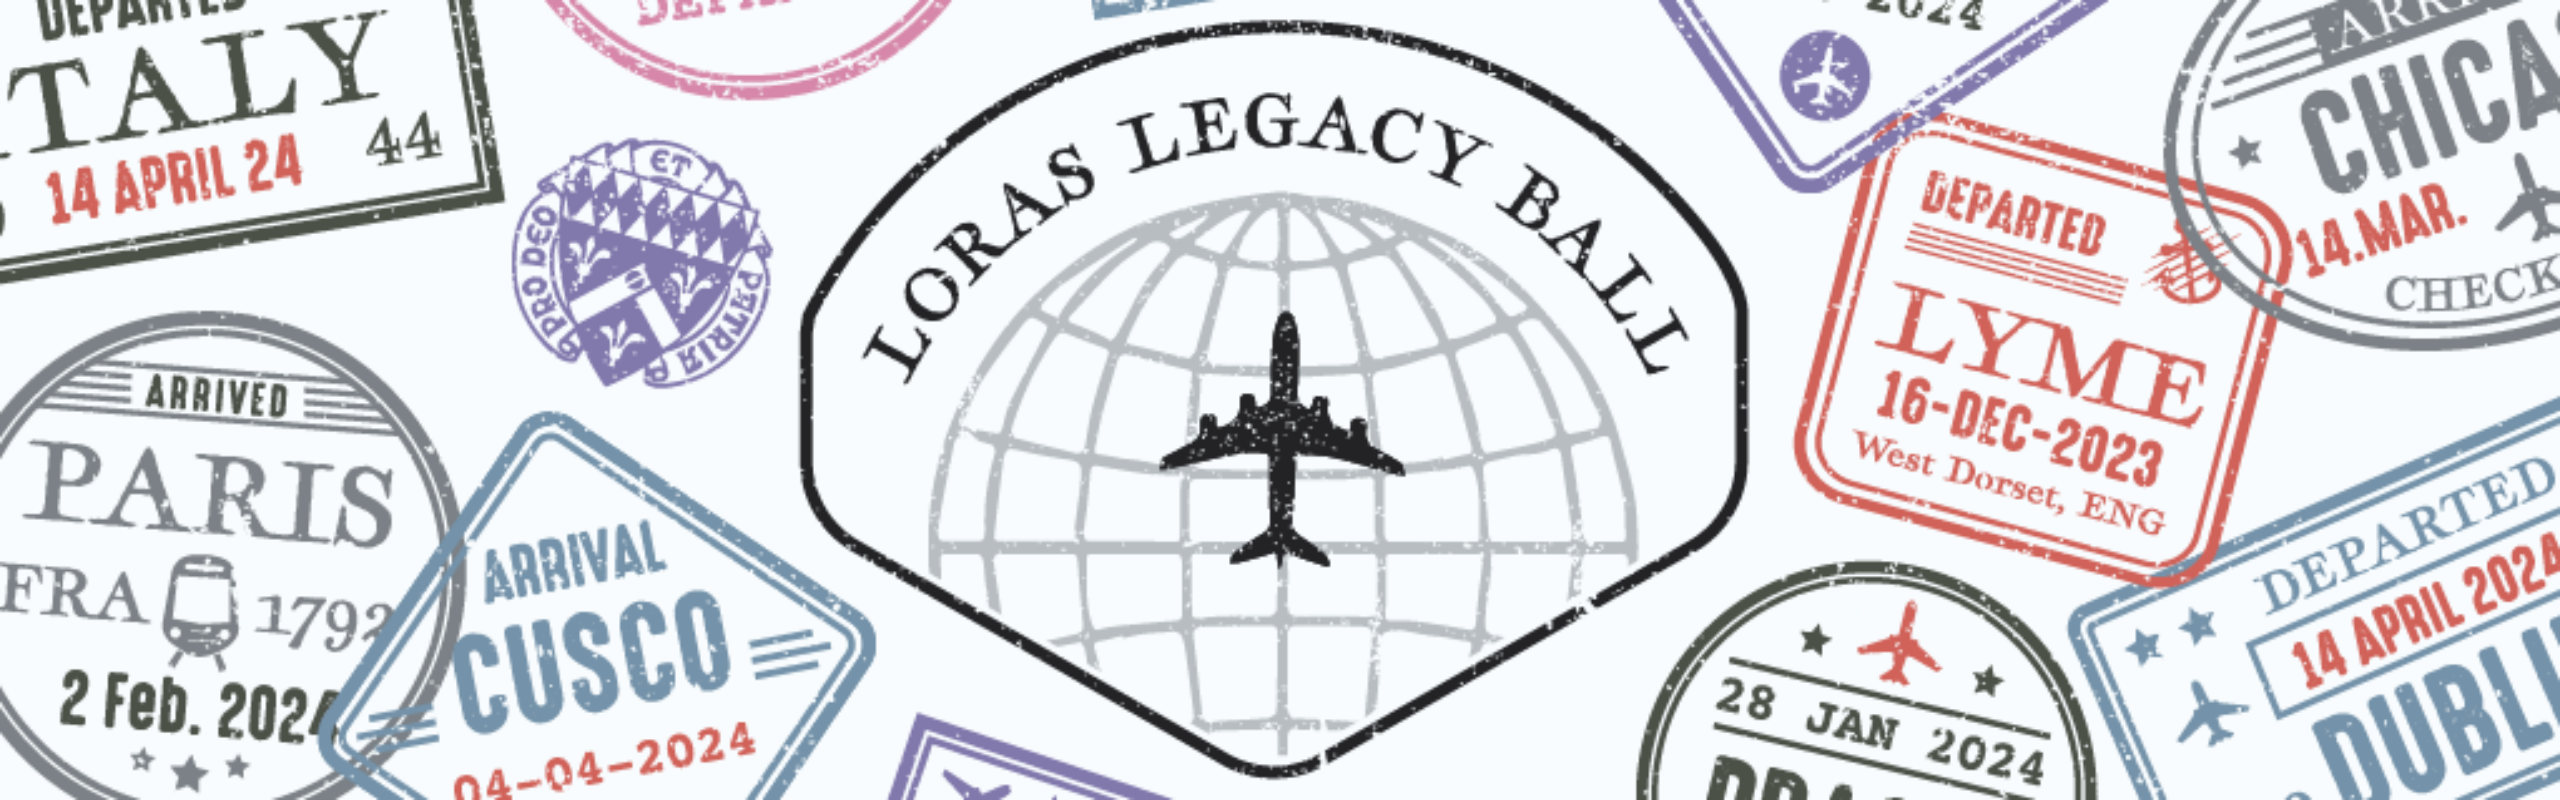 Loras Legacy Ball